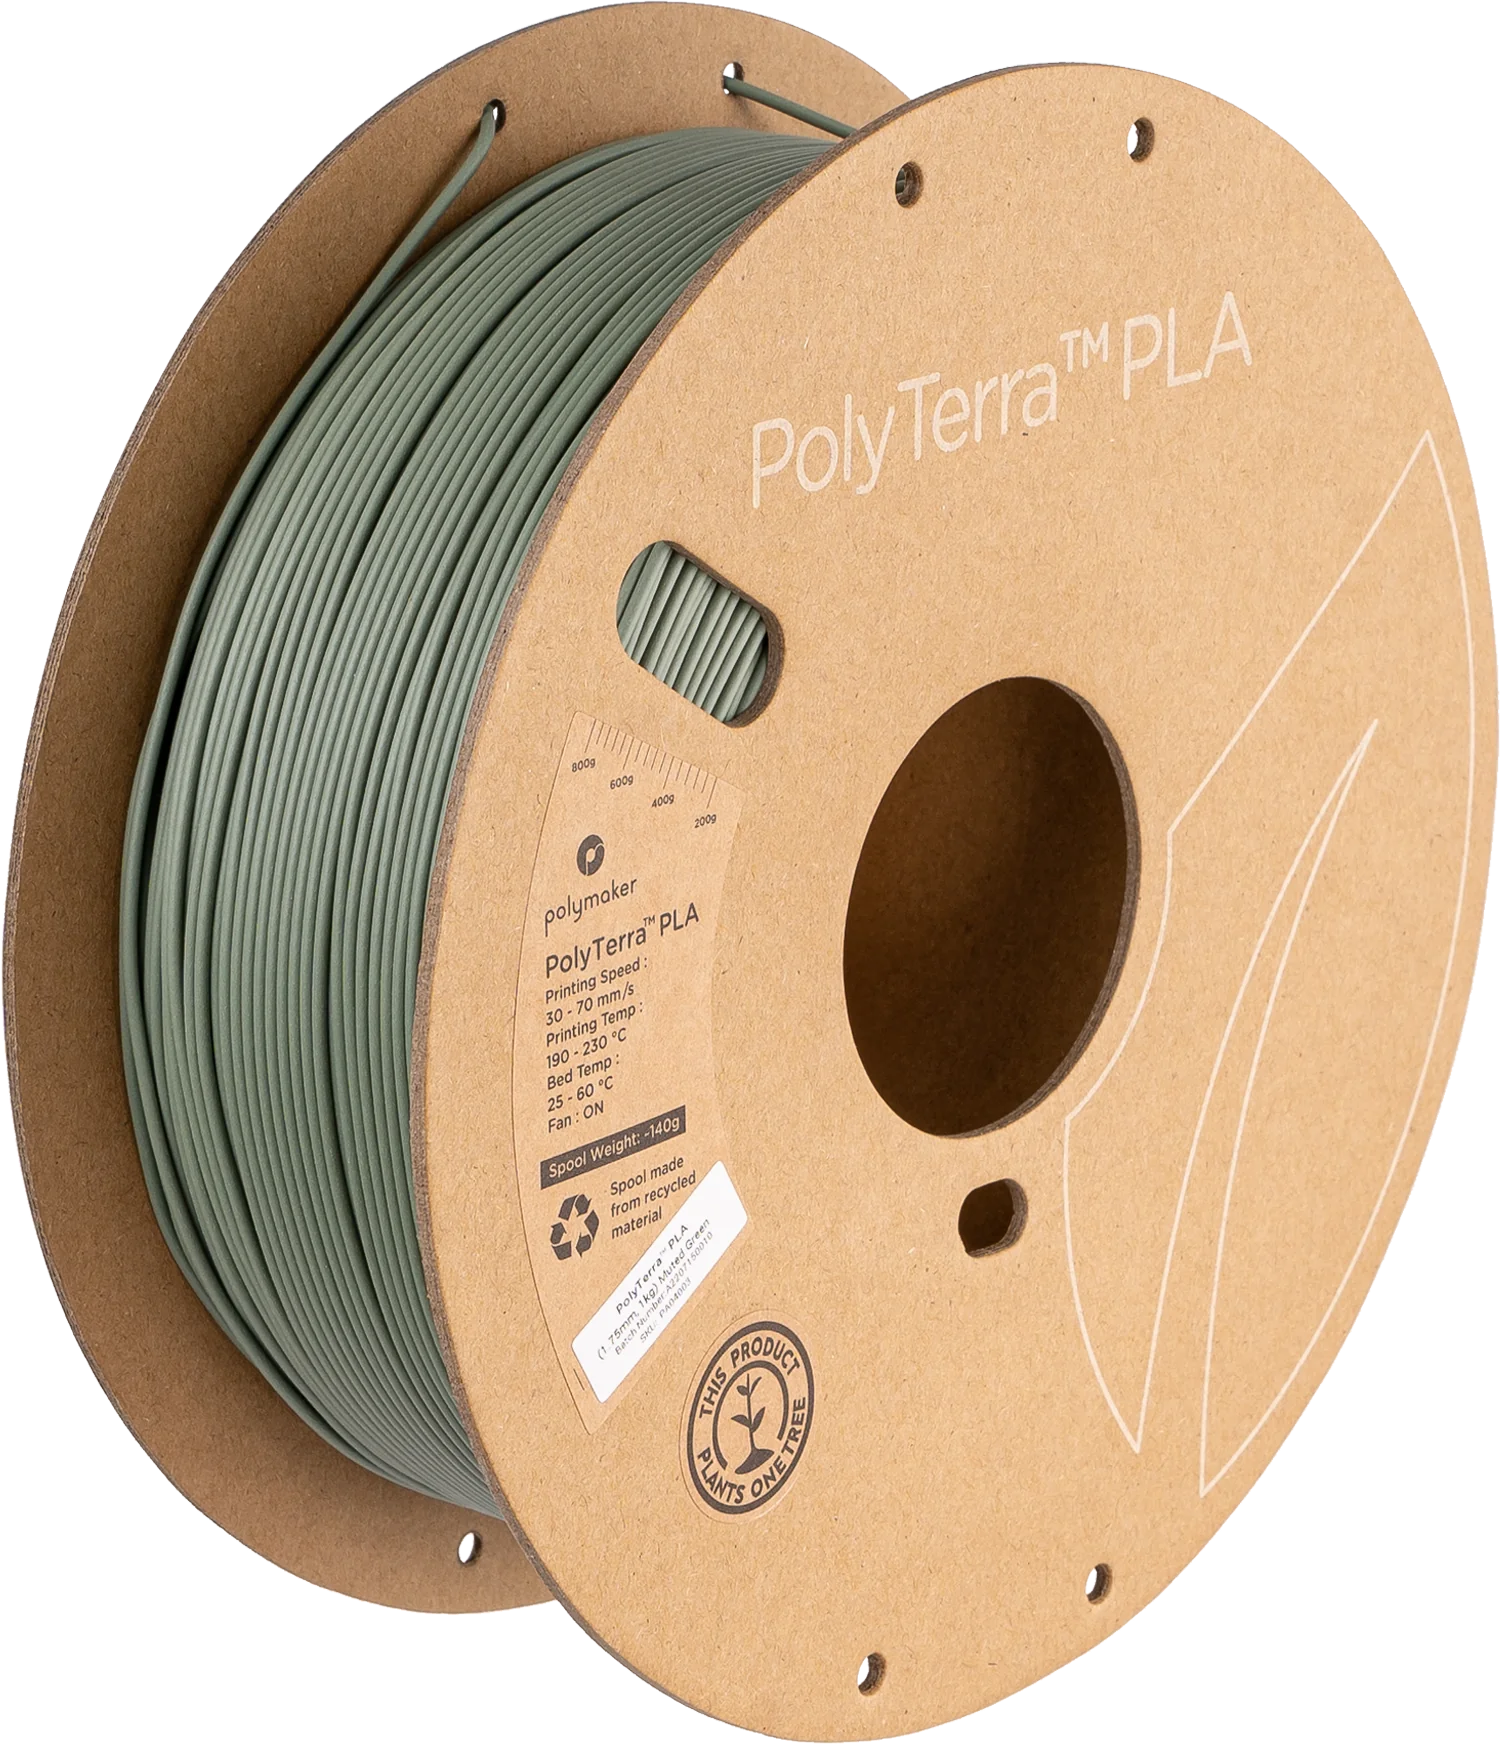 Polymaker PolyTerra PLA - Muted Green